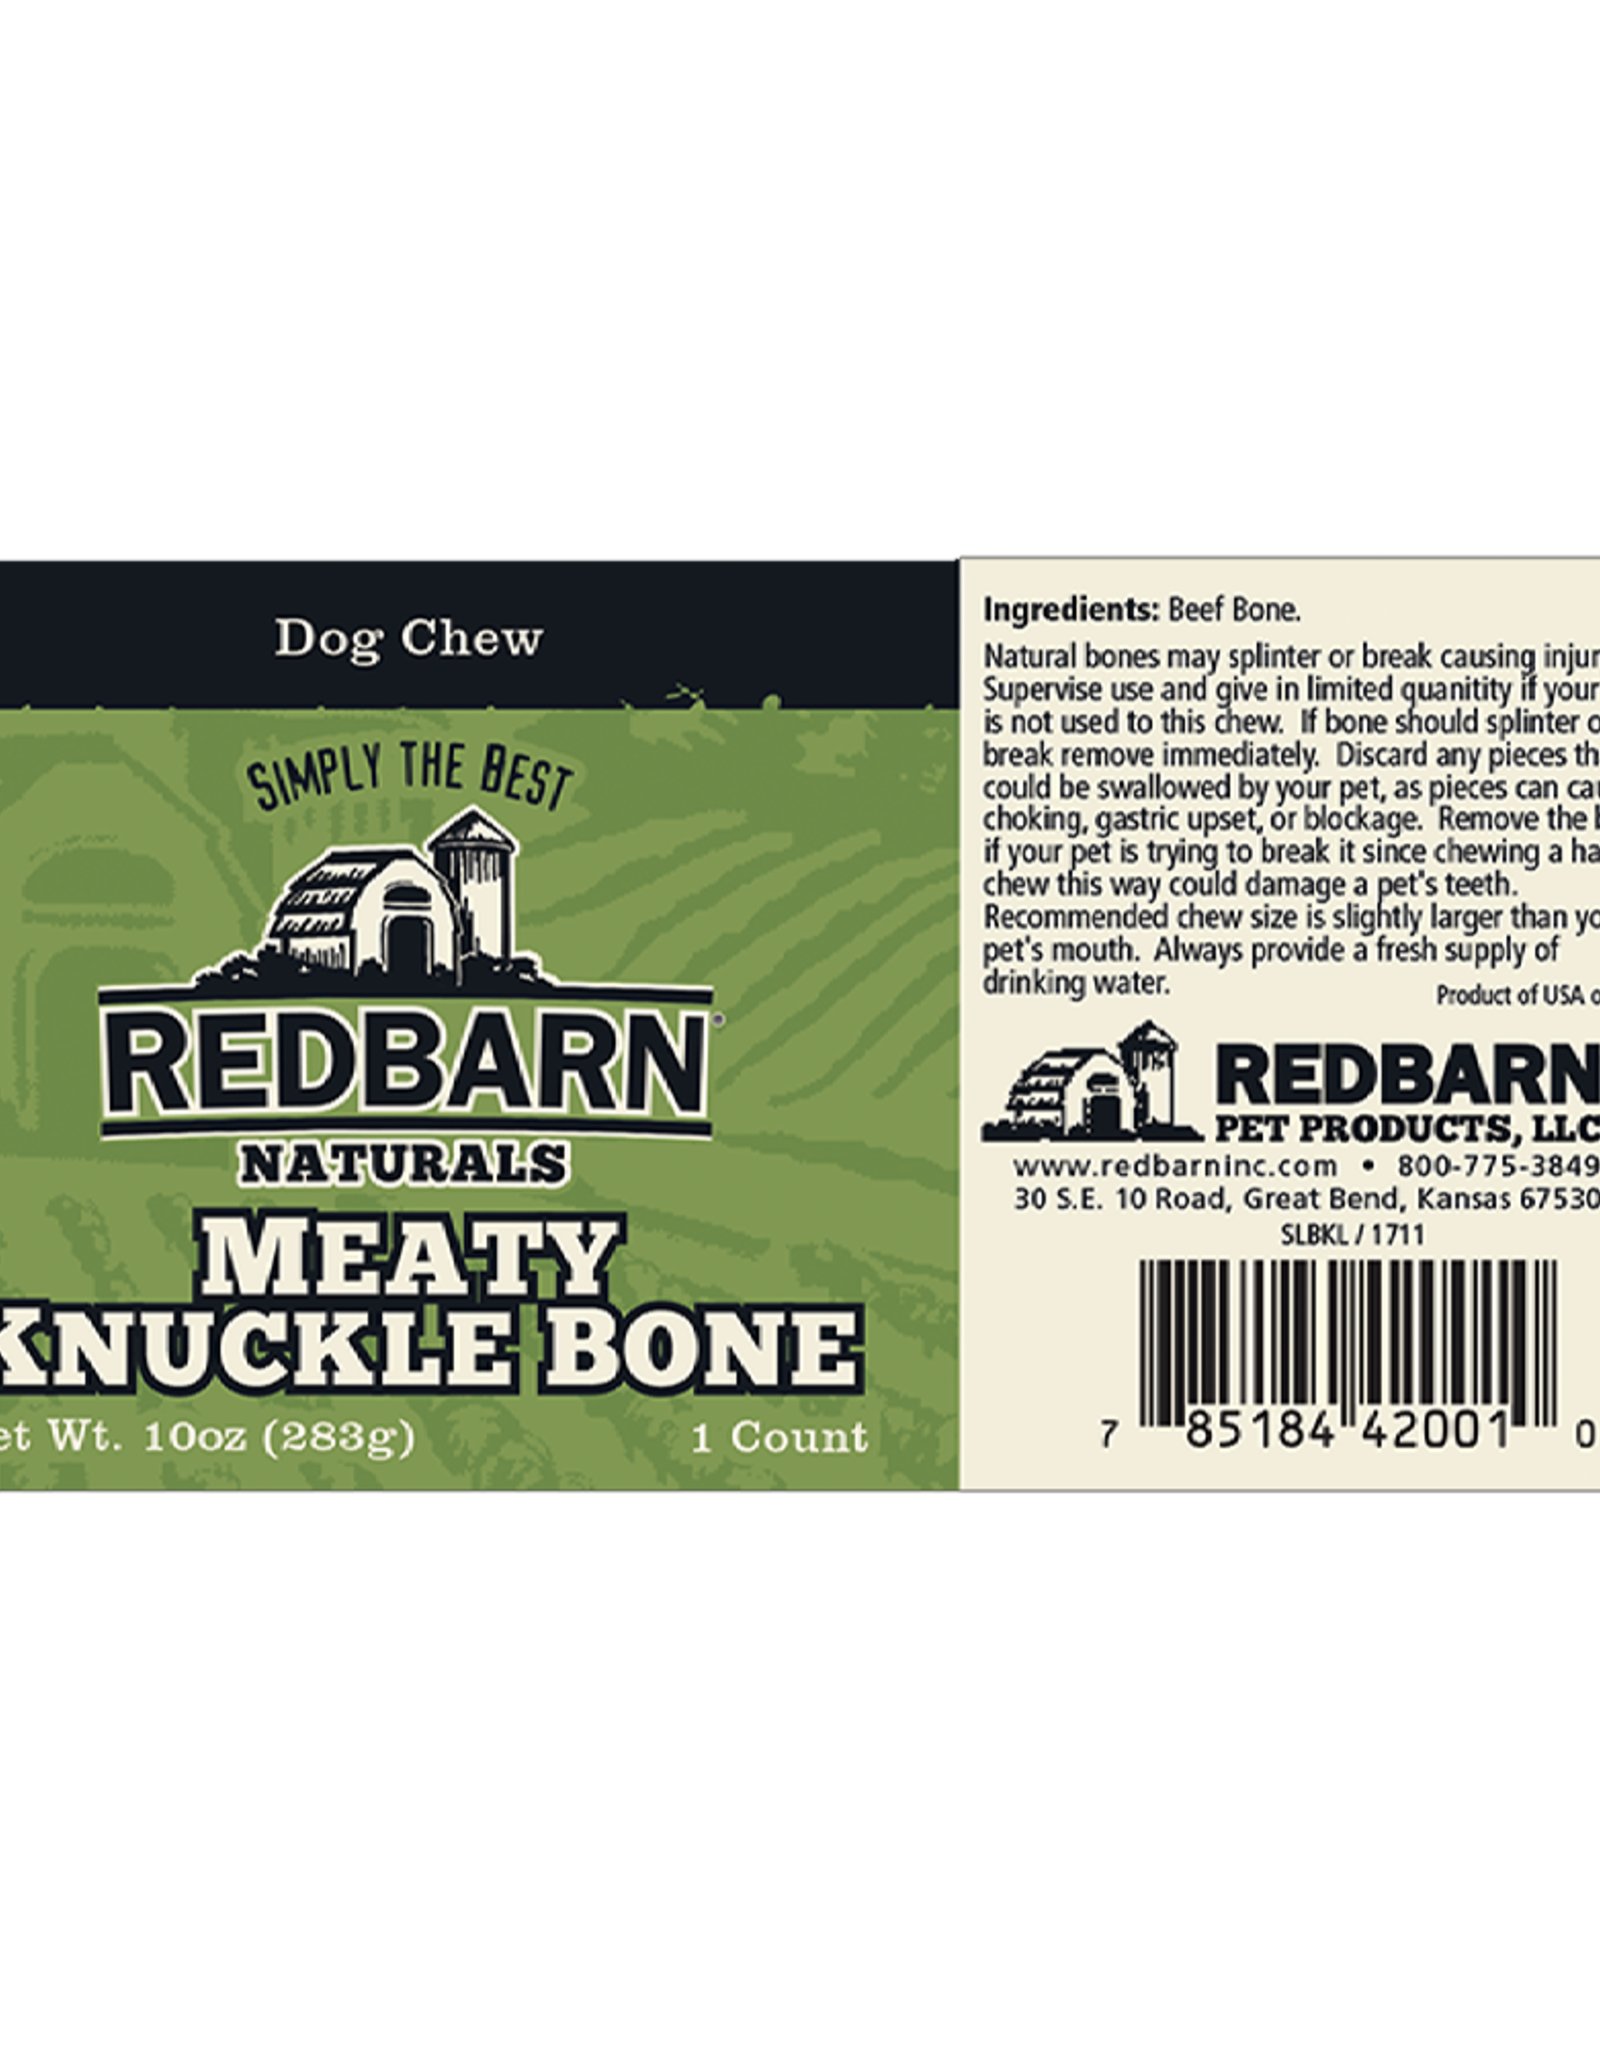 REDBARN PET PRODUCTS REDBARN BEEF BONE KNUCKLE